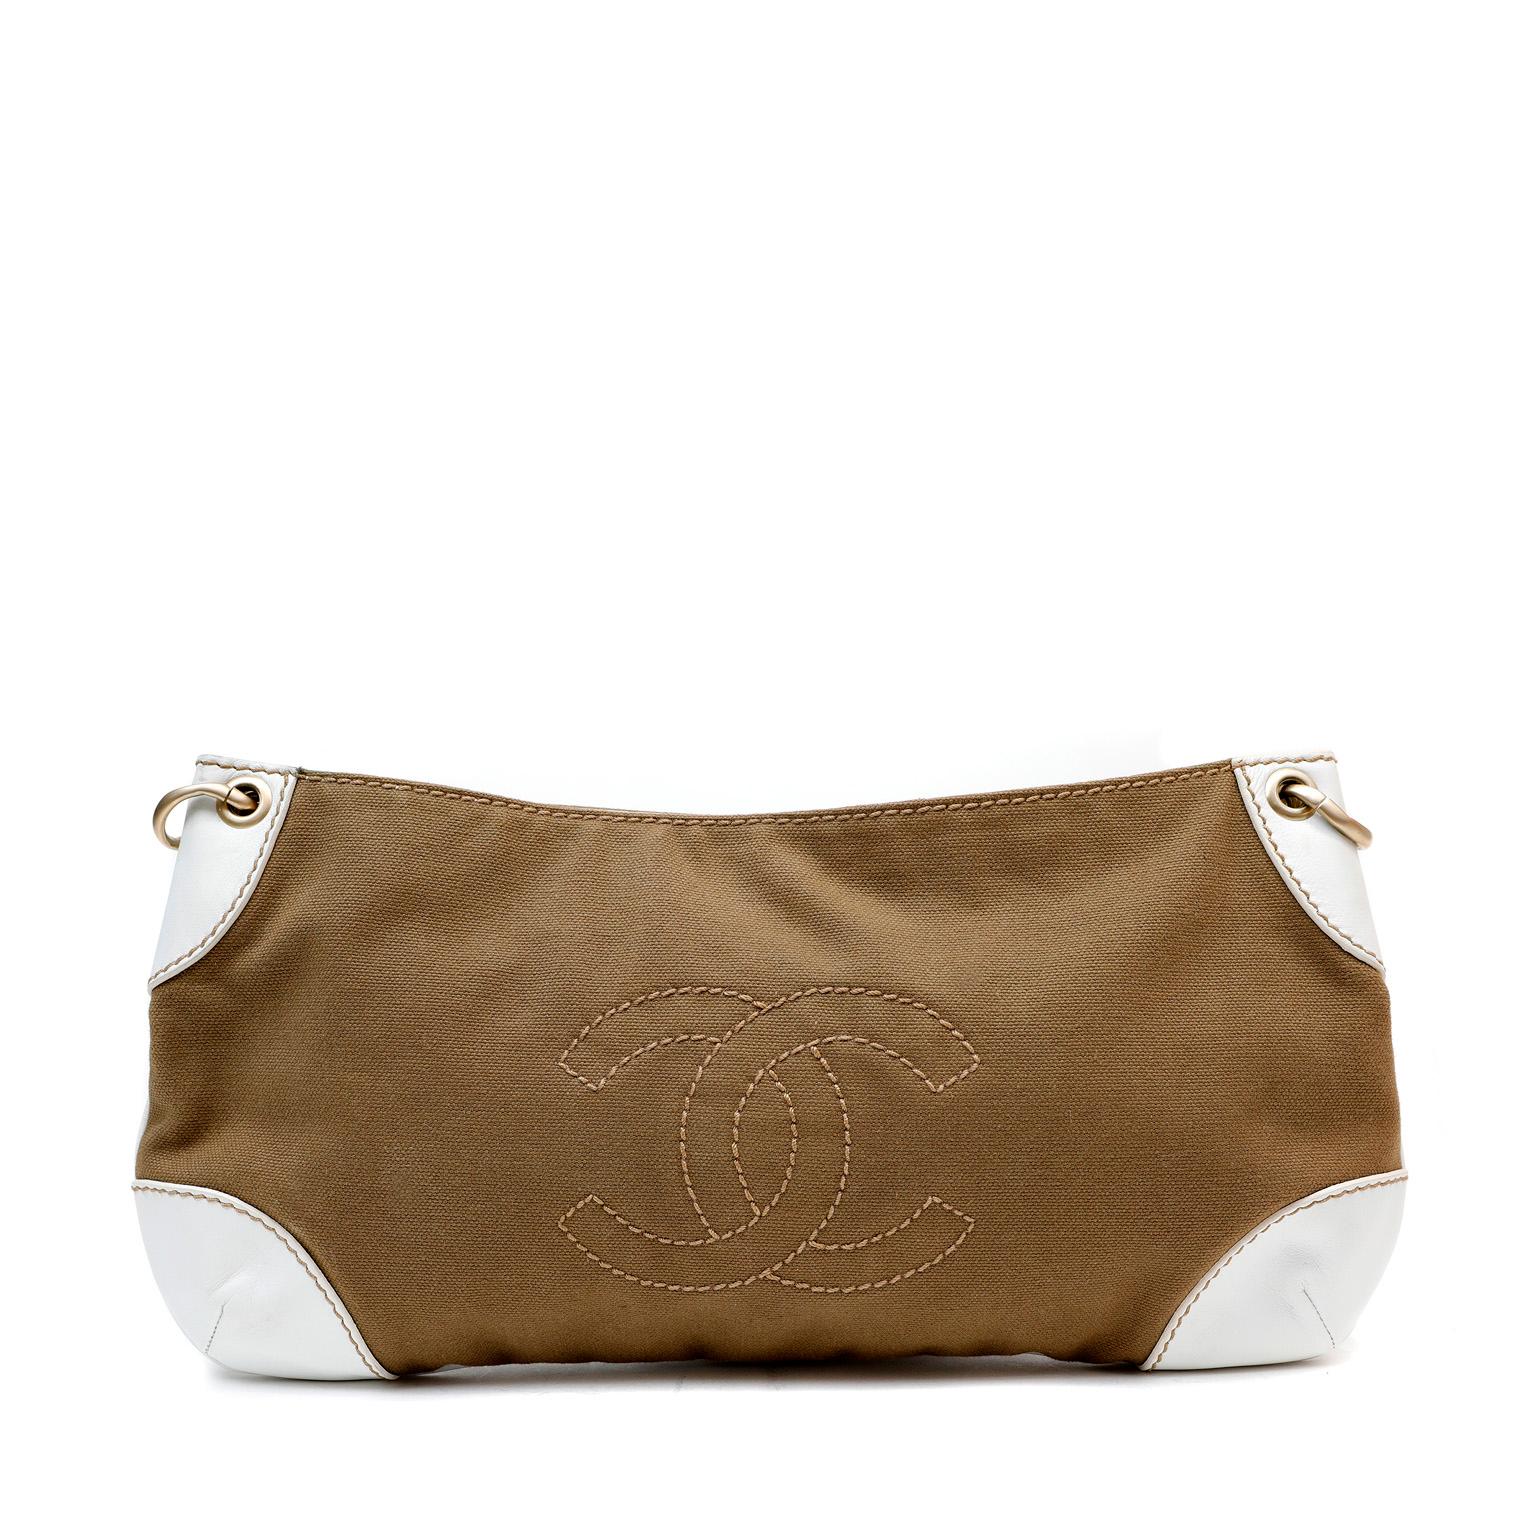 Chanel Olsen Bag - 4 For Sale on 1stDibs